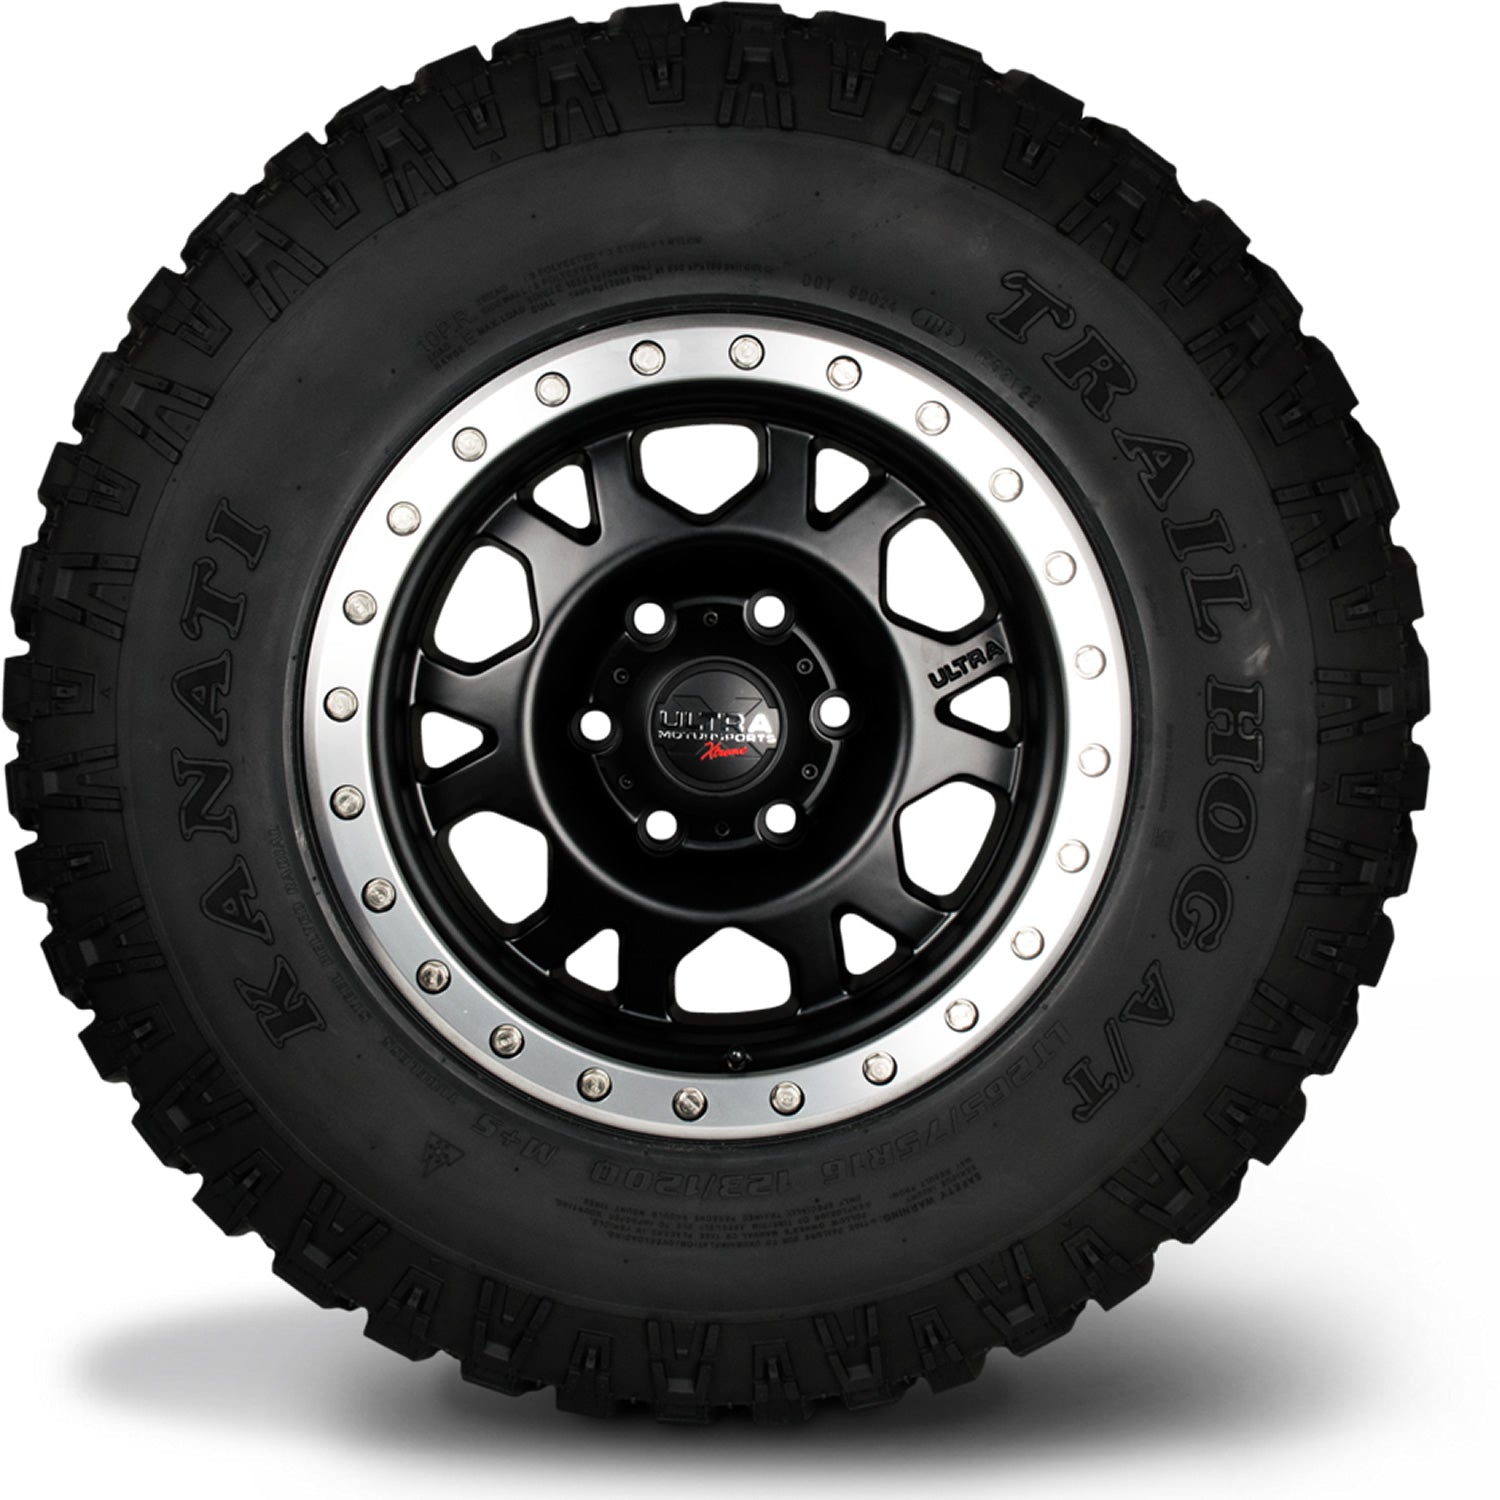 KANATI TRAIL HOG LT285/70R17 (32.8X11.2R 17) Tires